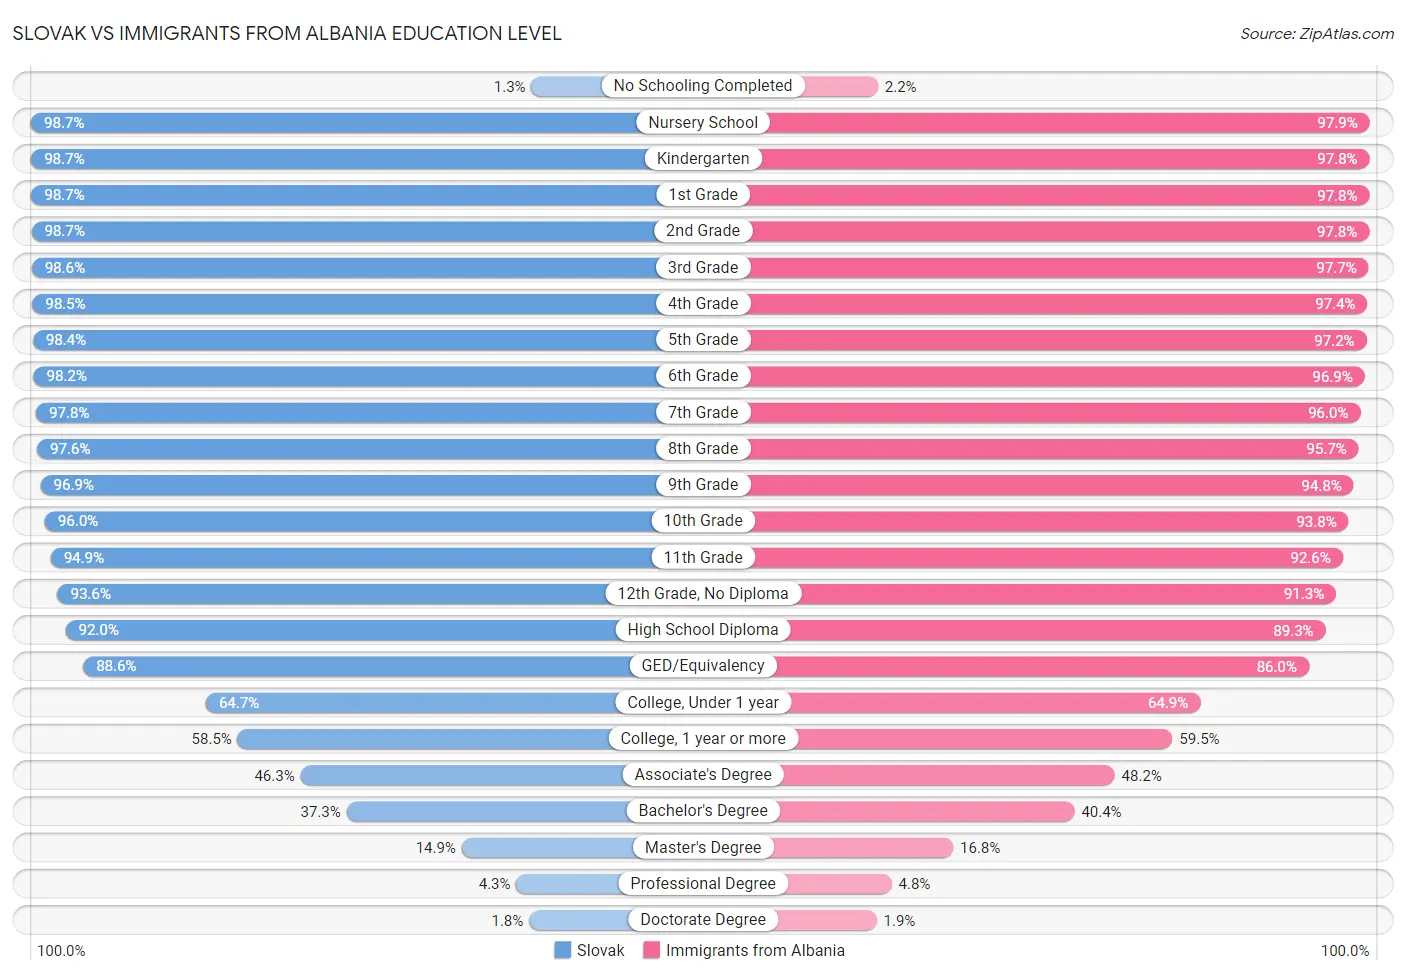 Slovak vs Immigrants from Albania Education Level